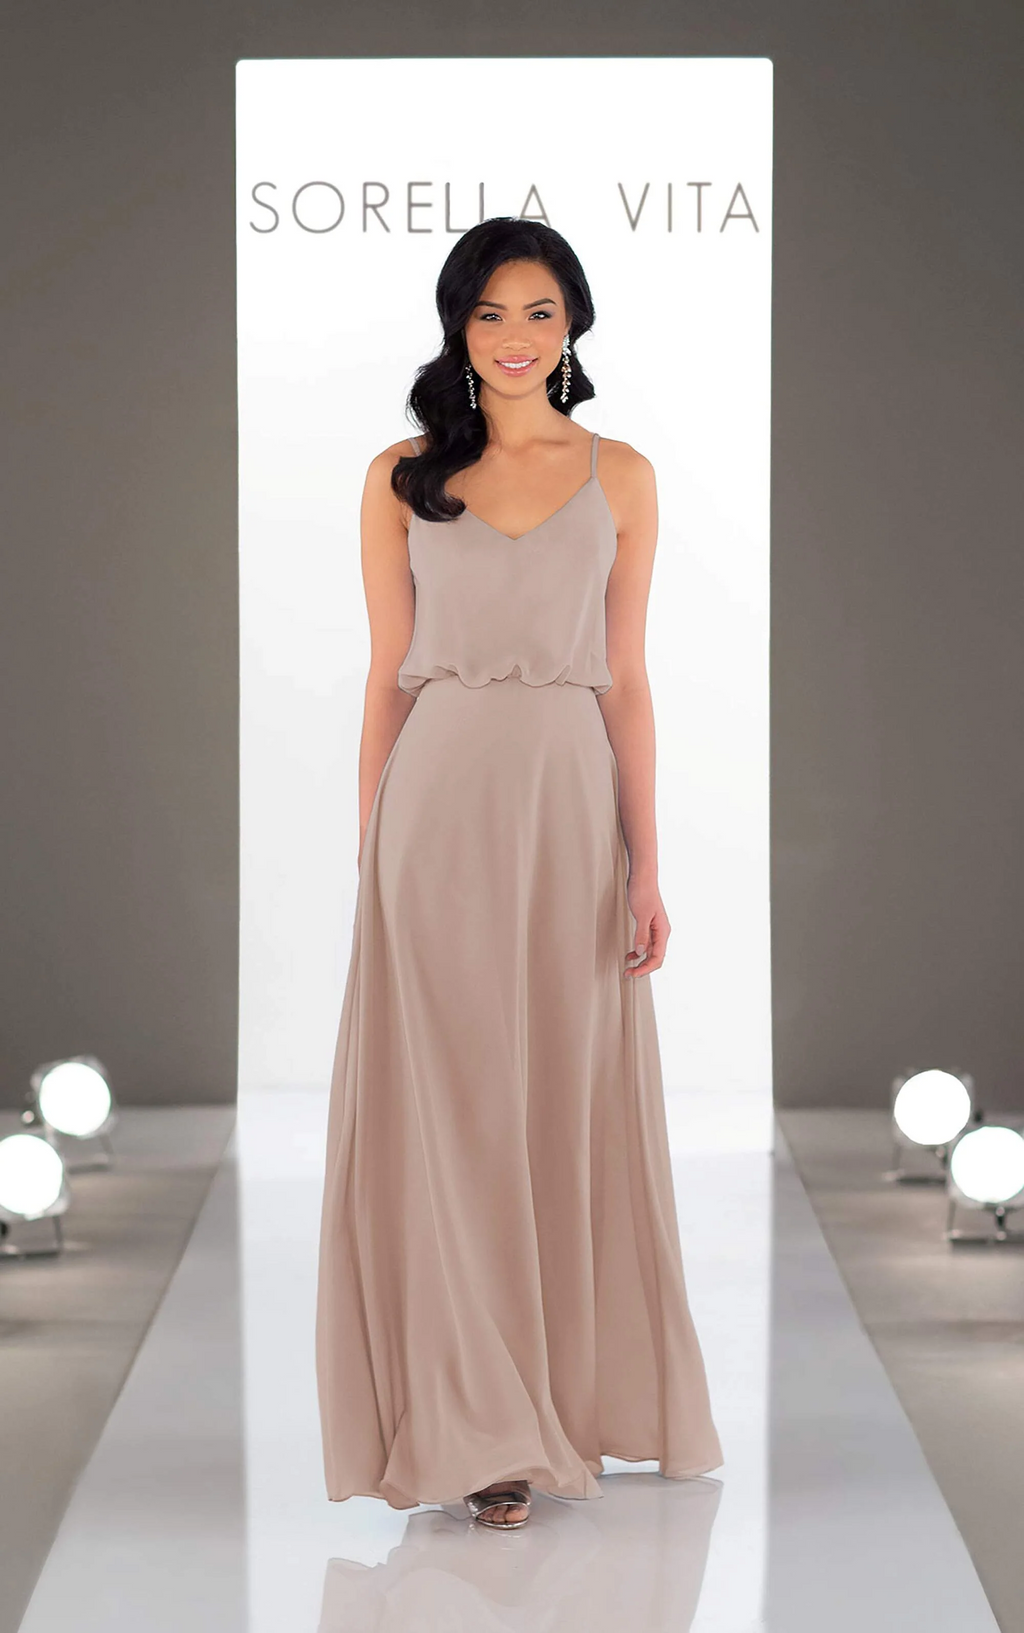 Sorella Vita Dress Style 9132 (Vintage Rose-size 16) Prom, Ball., Black-tie, Bridesmaid, Pageant